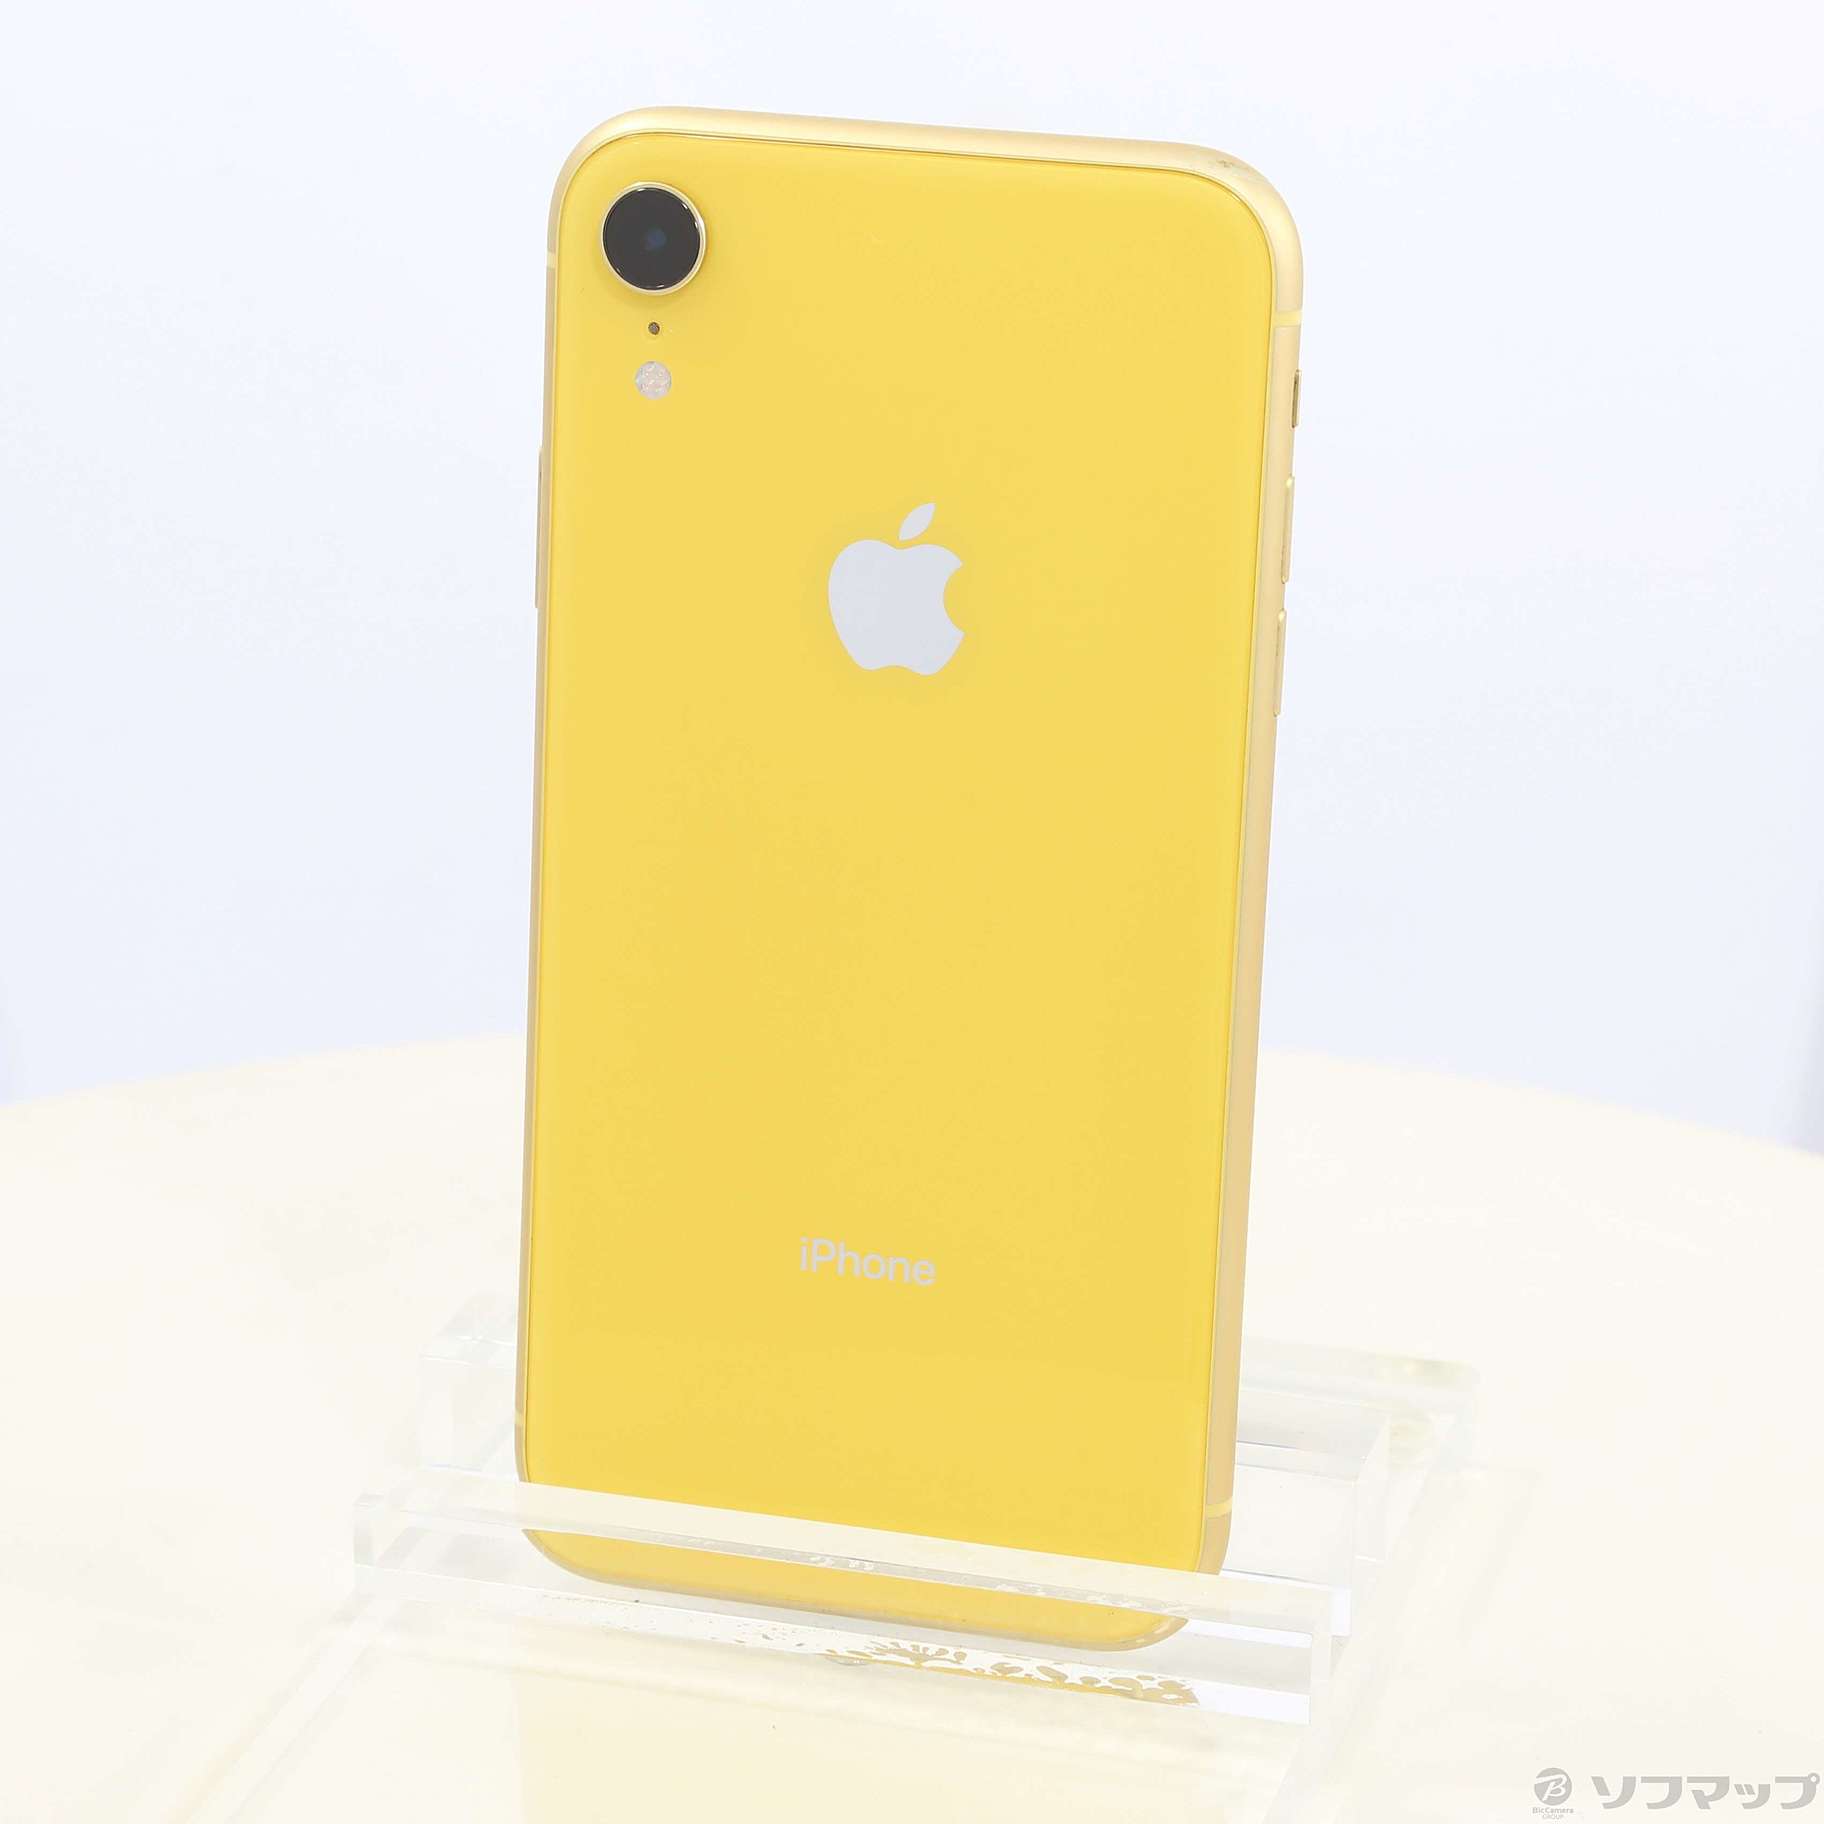 iPhoneiPhone XR Yellow 256 GB SIMフリー